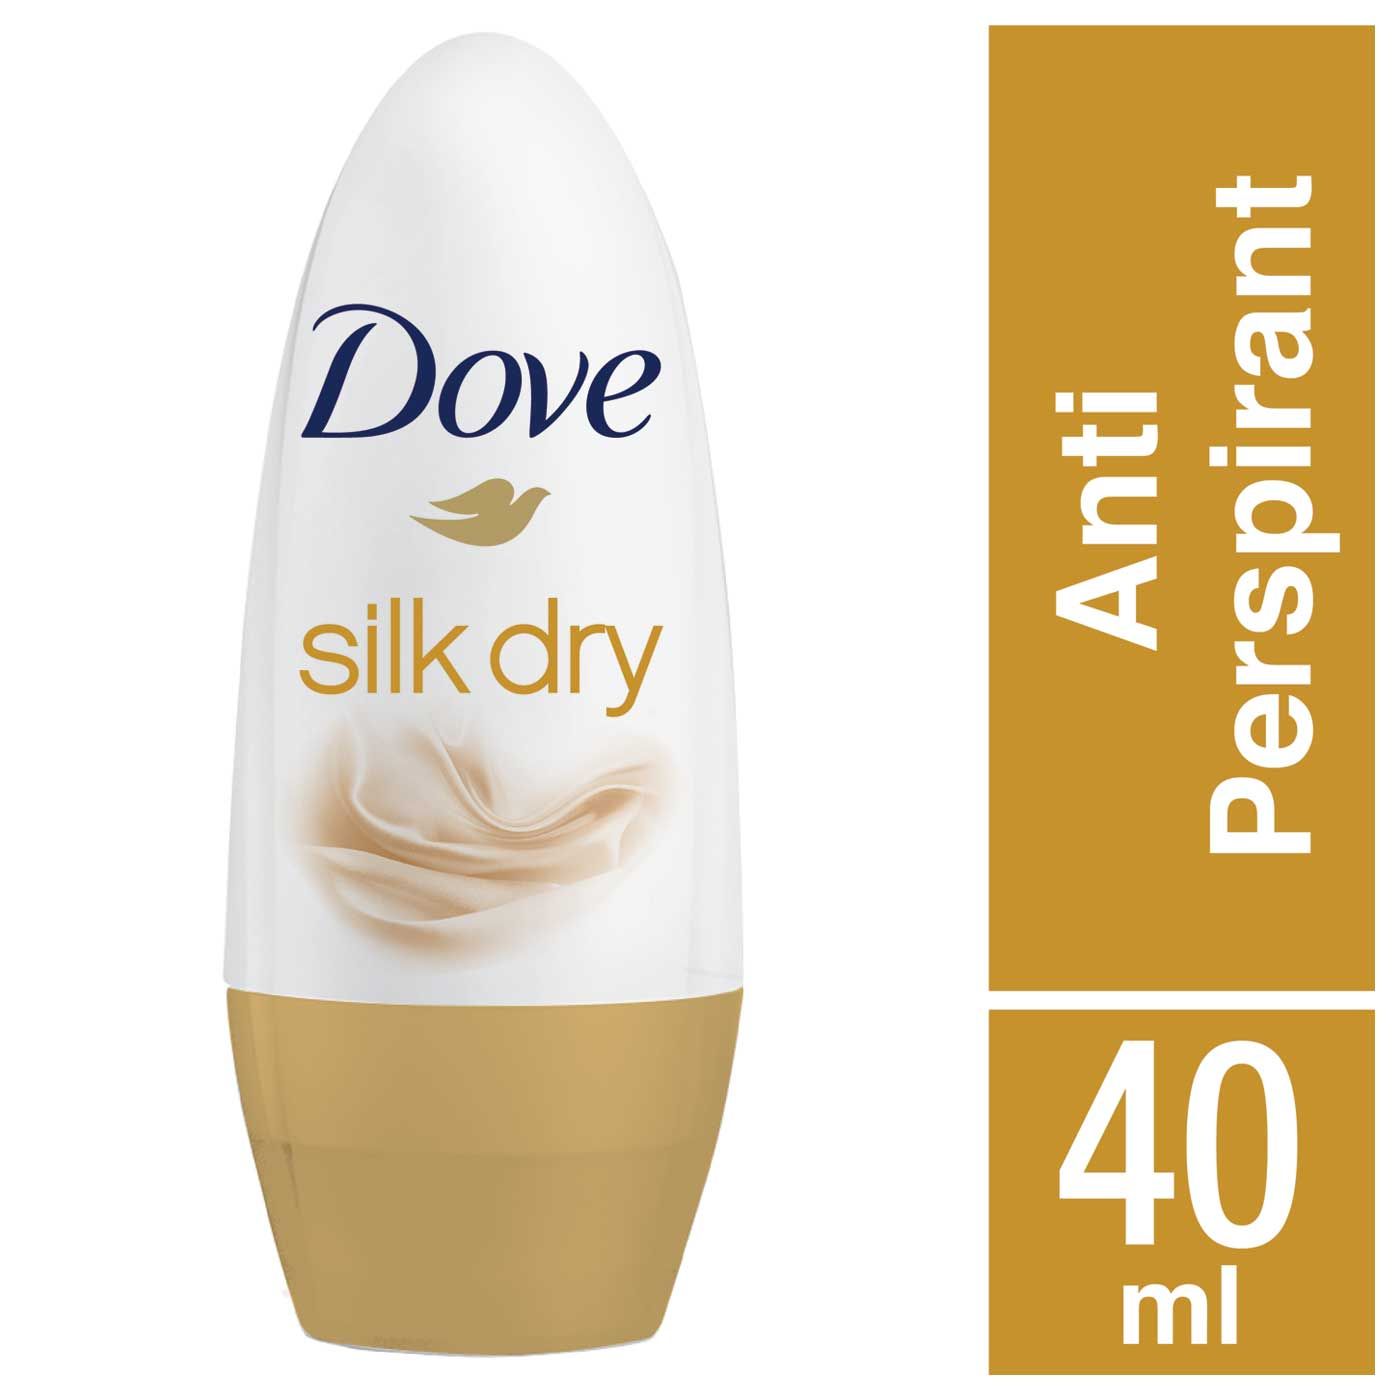 Dove Roll On Deodorant Silk Dry 40ml - 1